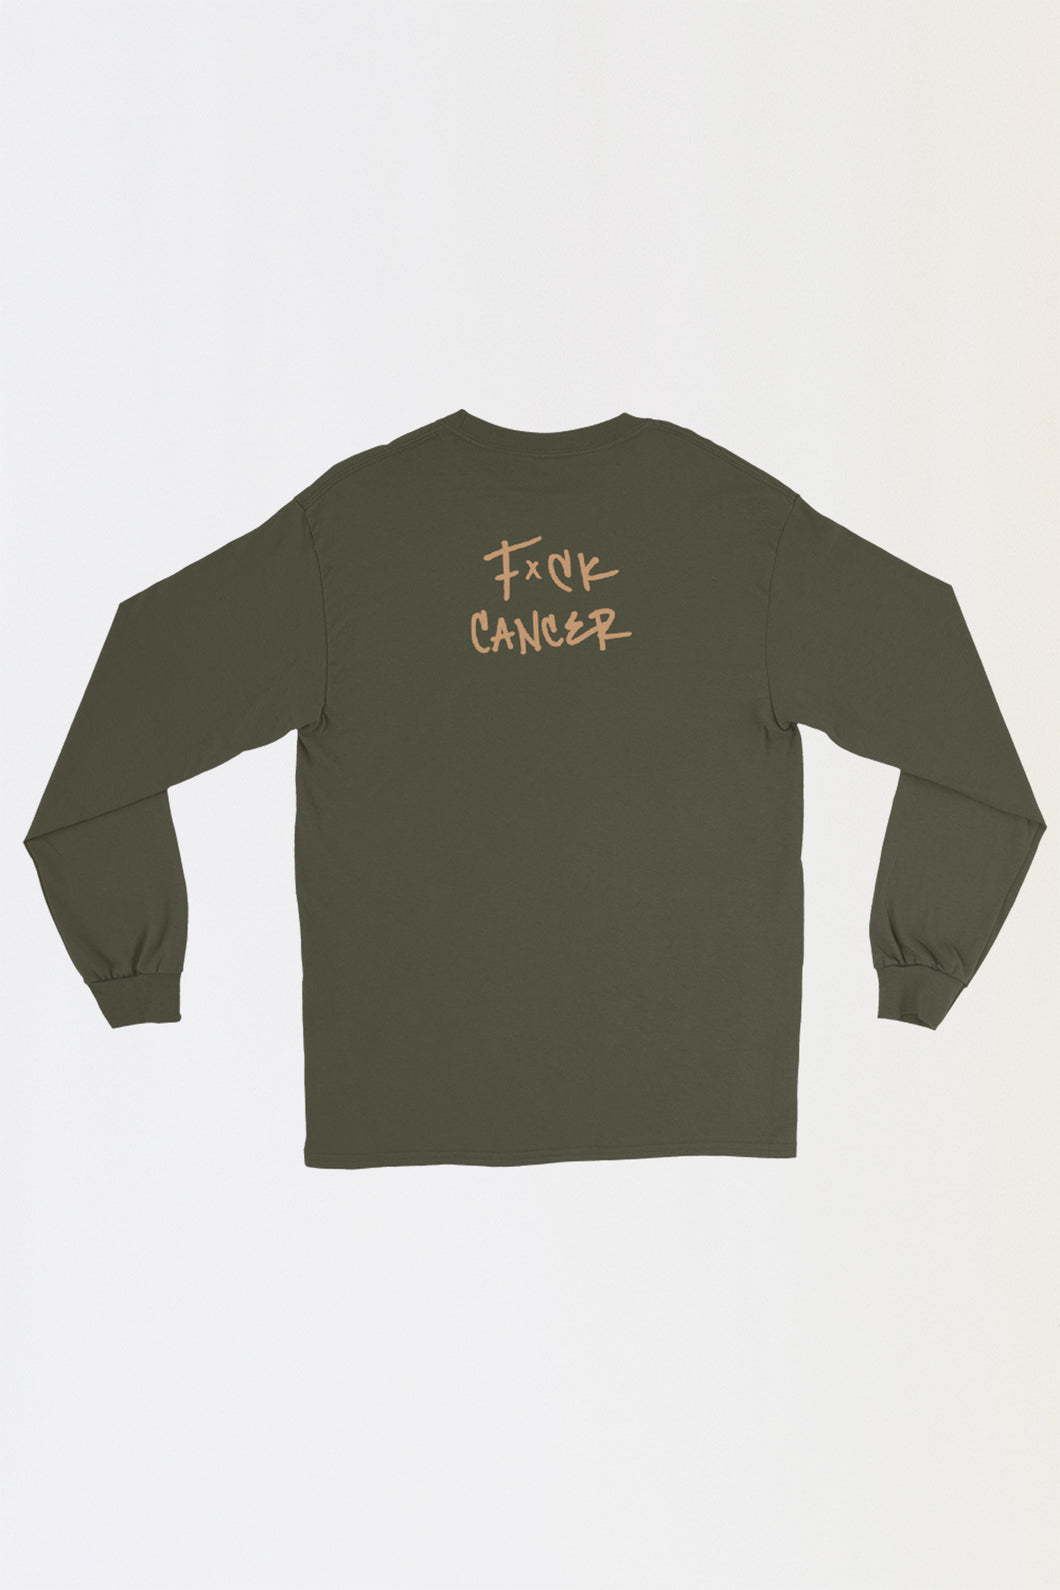 Ly&Co Fxck Cancer Long Sleeve - OLIVE